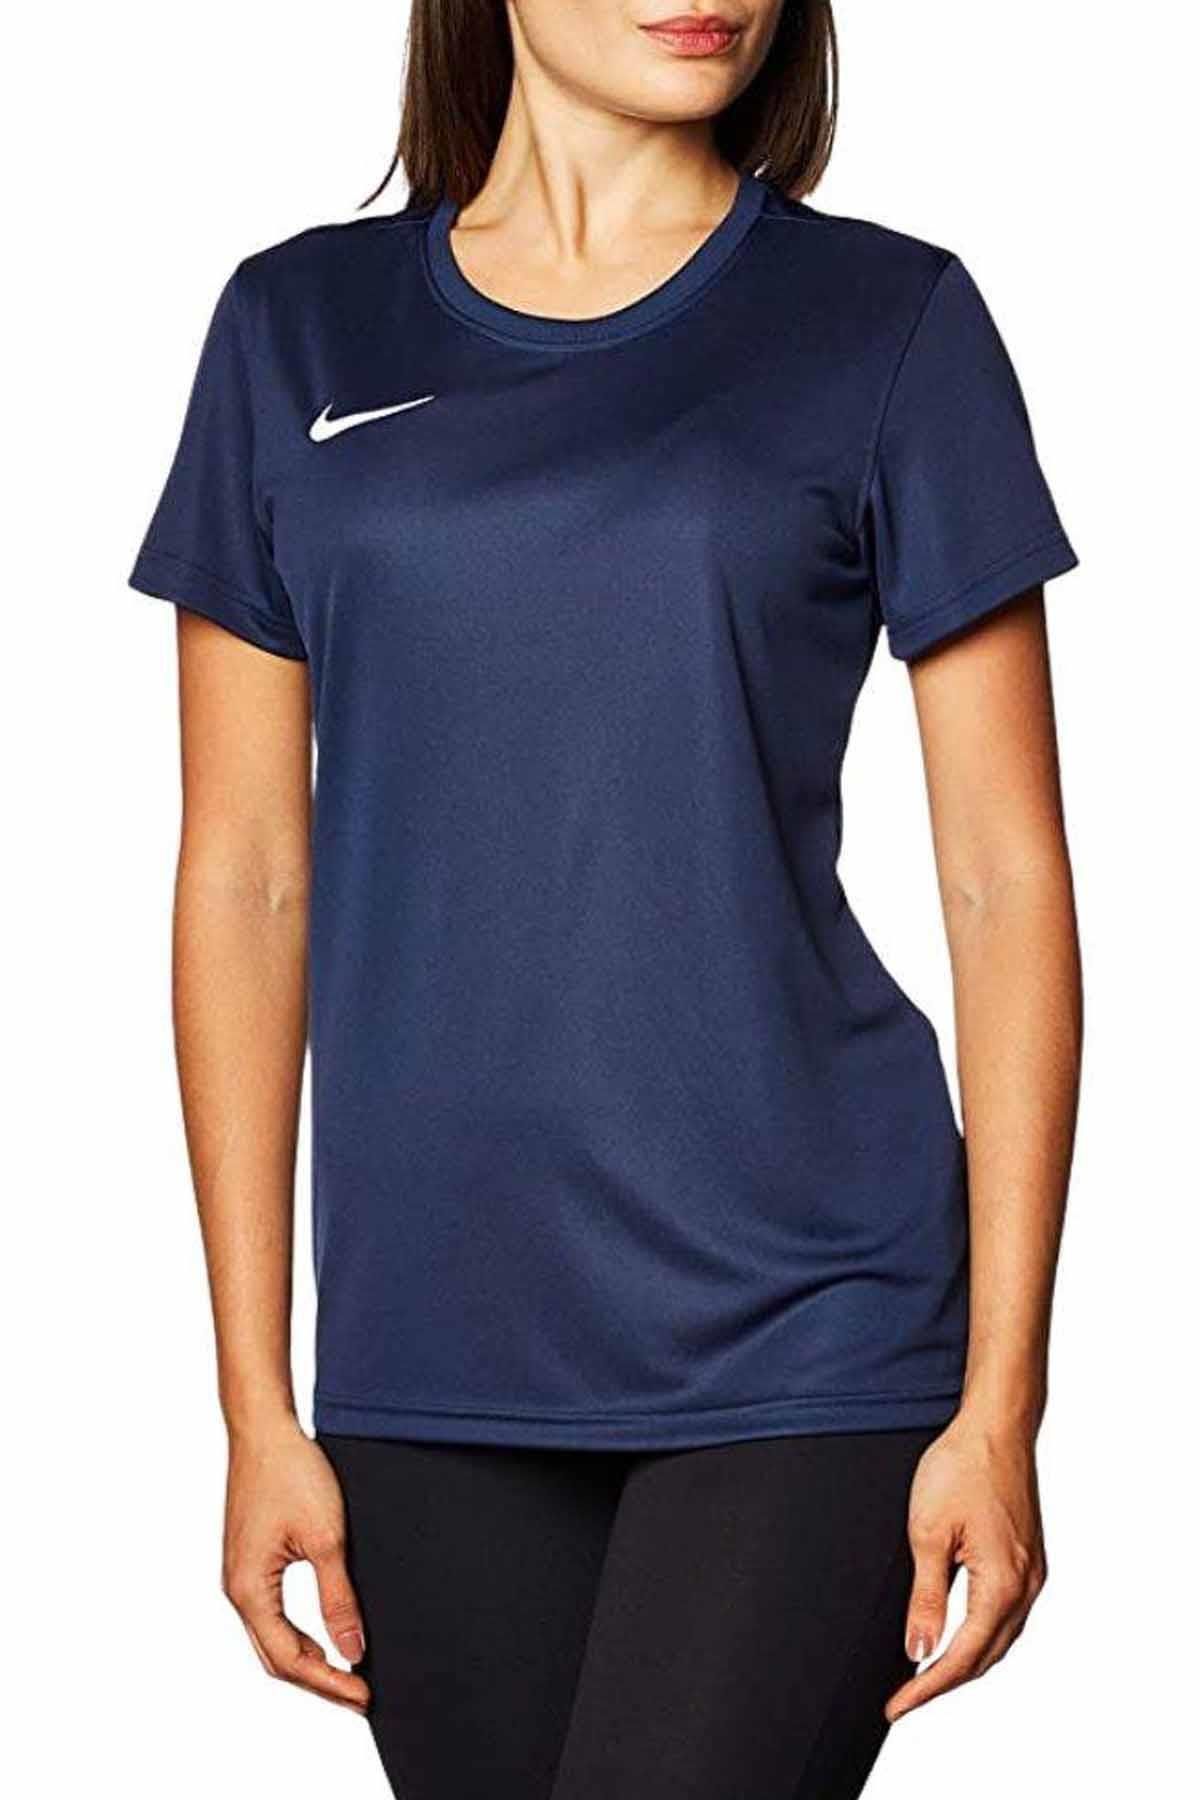 Nike W Dry Park Vıı Jsy Ss Kadın Tişört Bv6728-410-laci